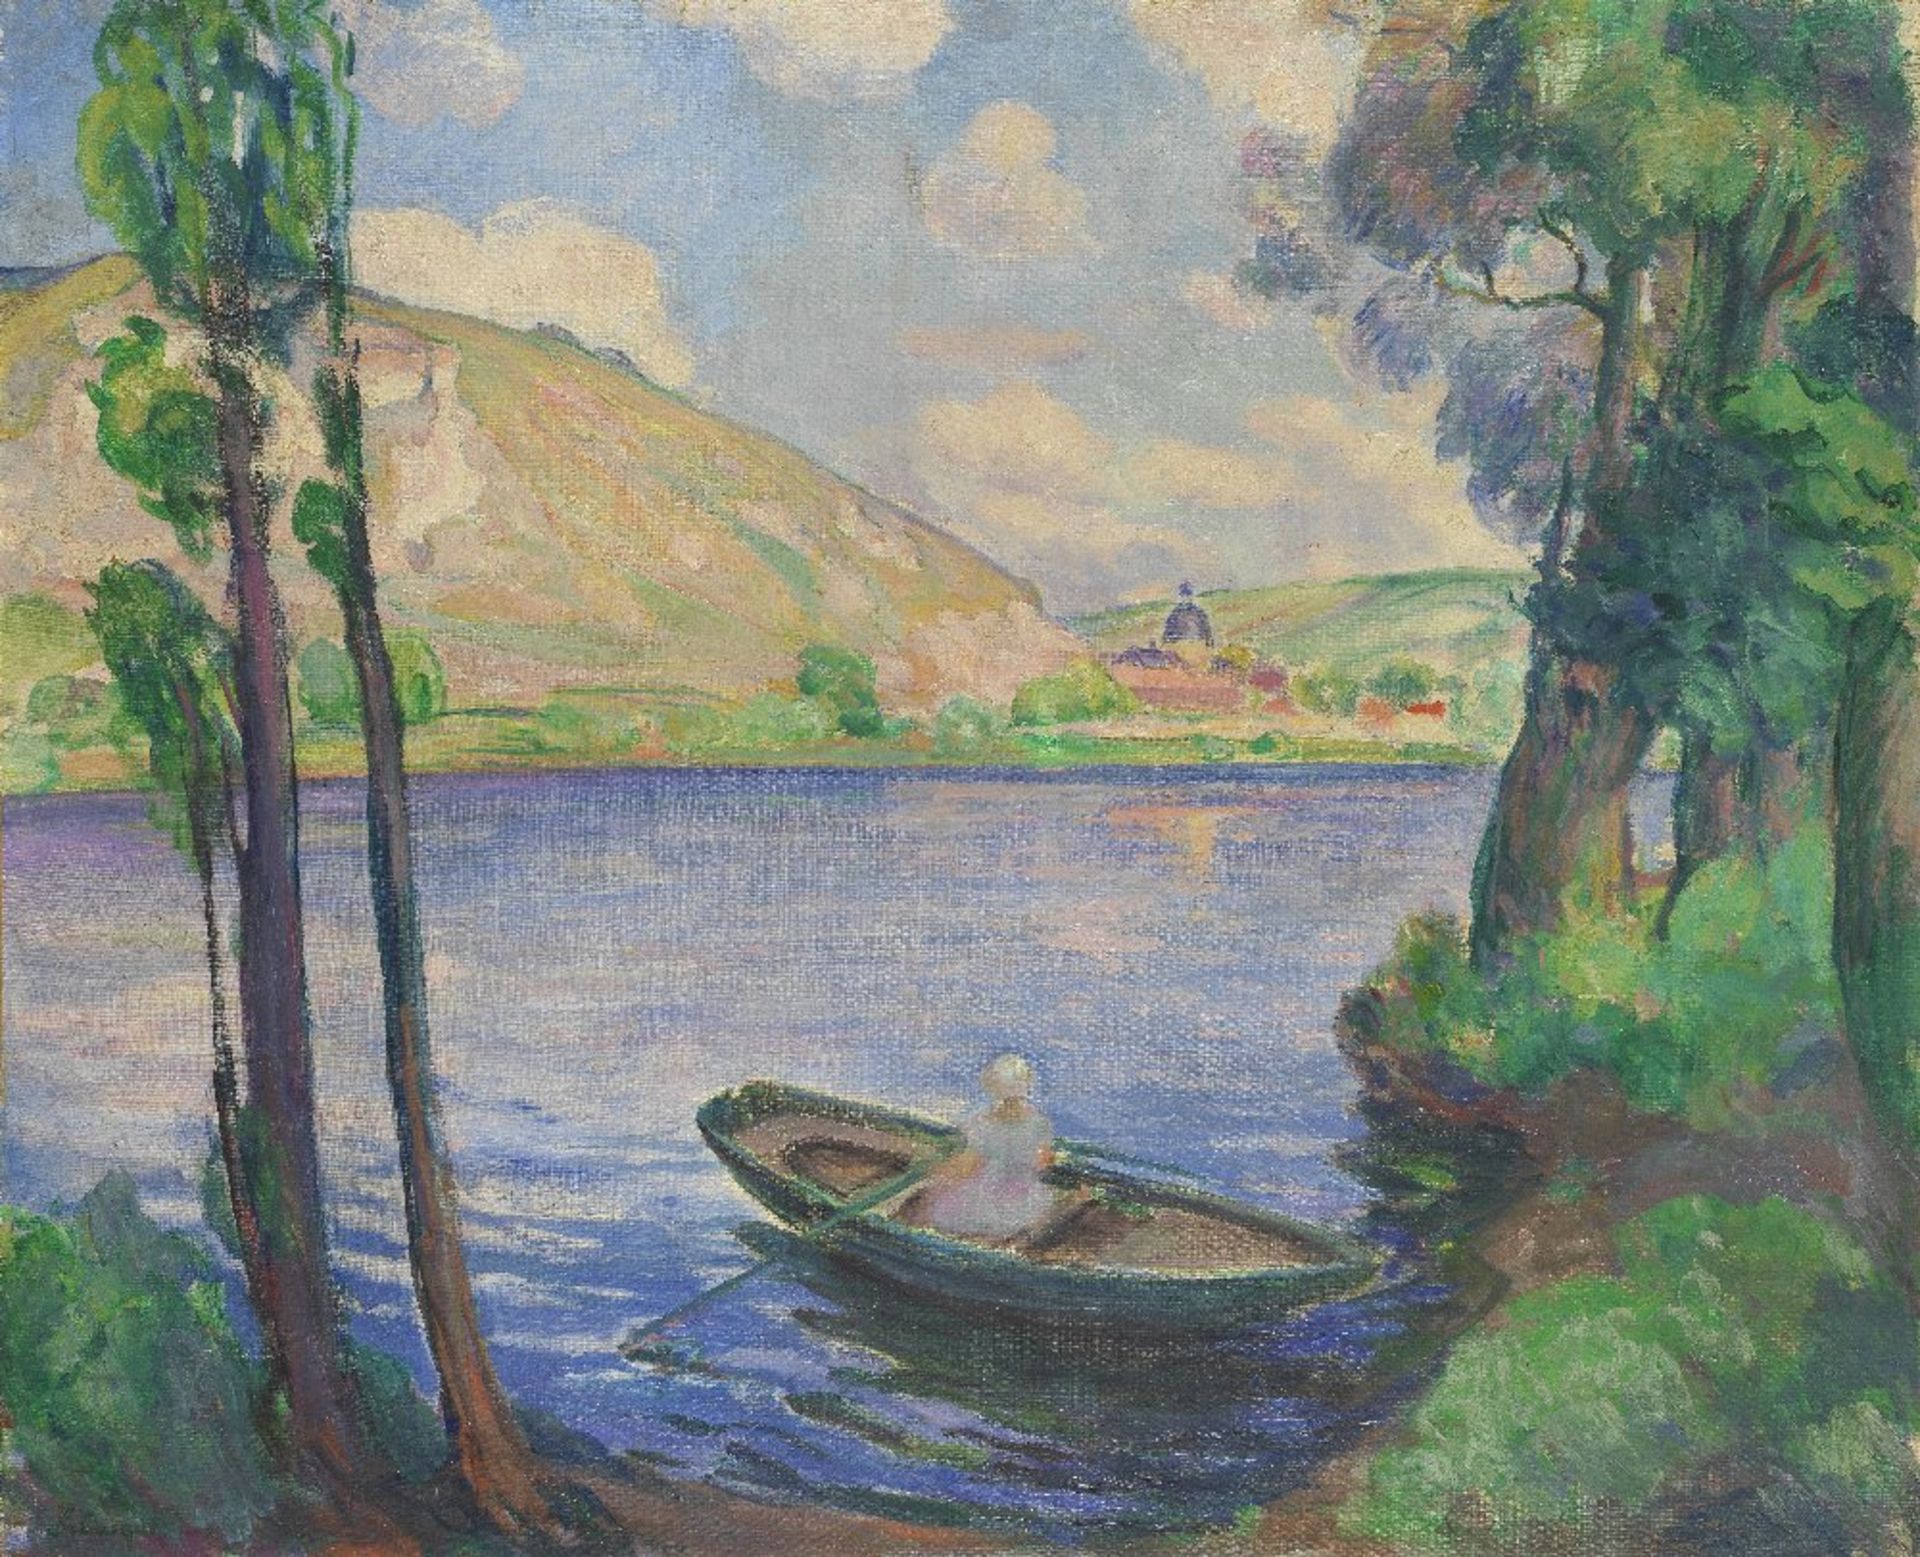 HENRI LEBASQUE (1865-1937) Les Andelys (Painted circa 1921)